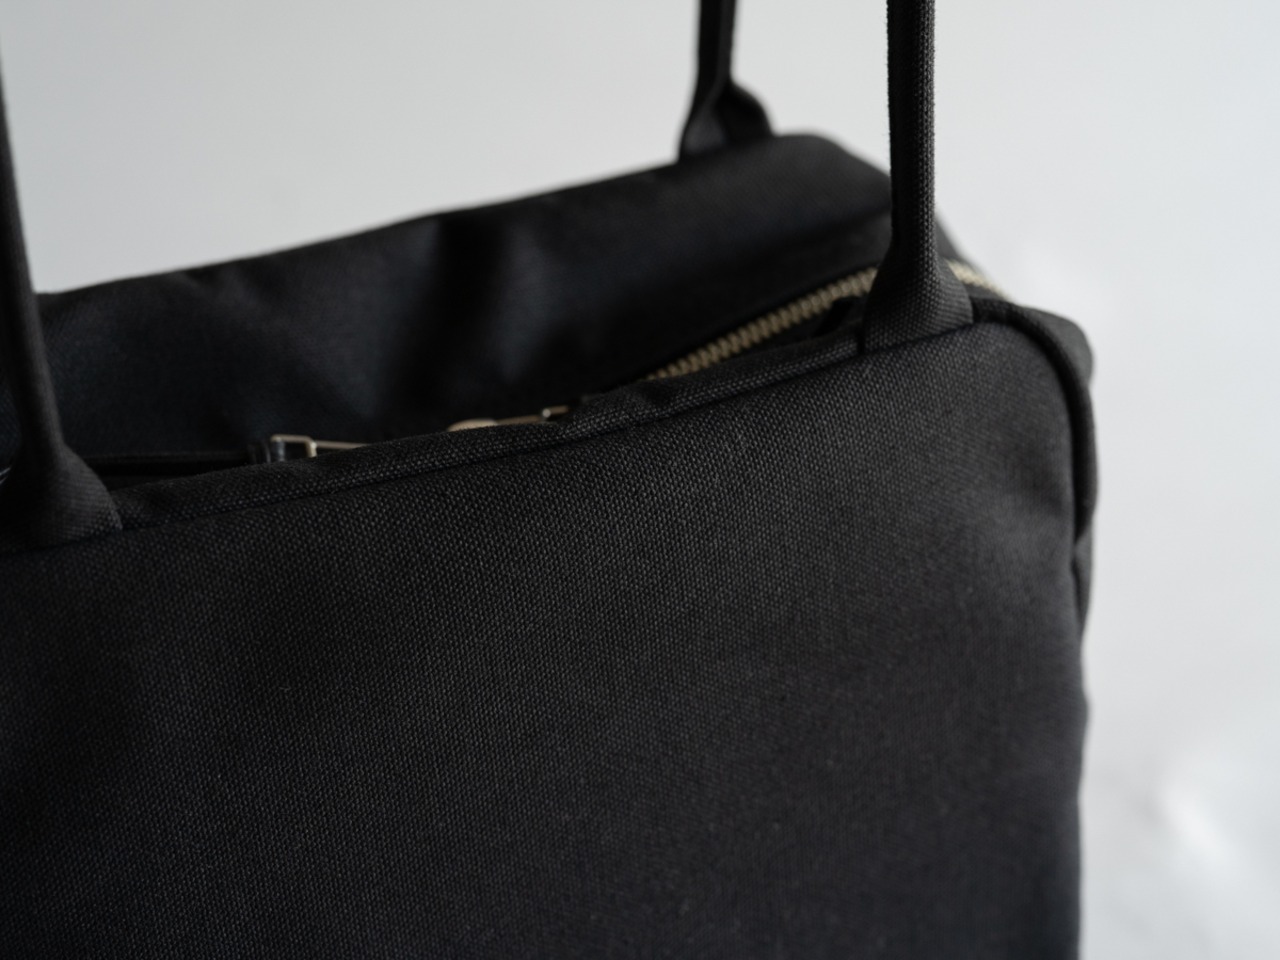 Cuboid bag ブラック